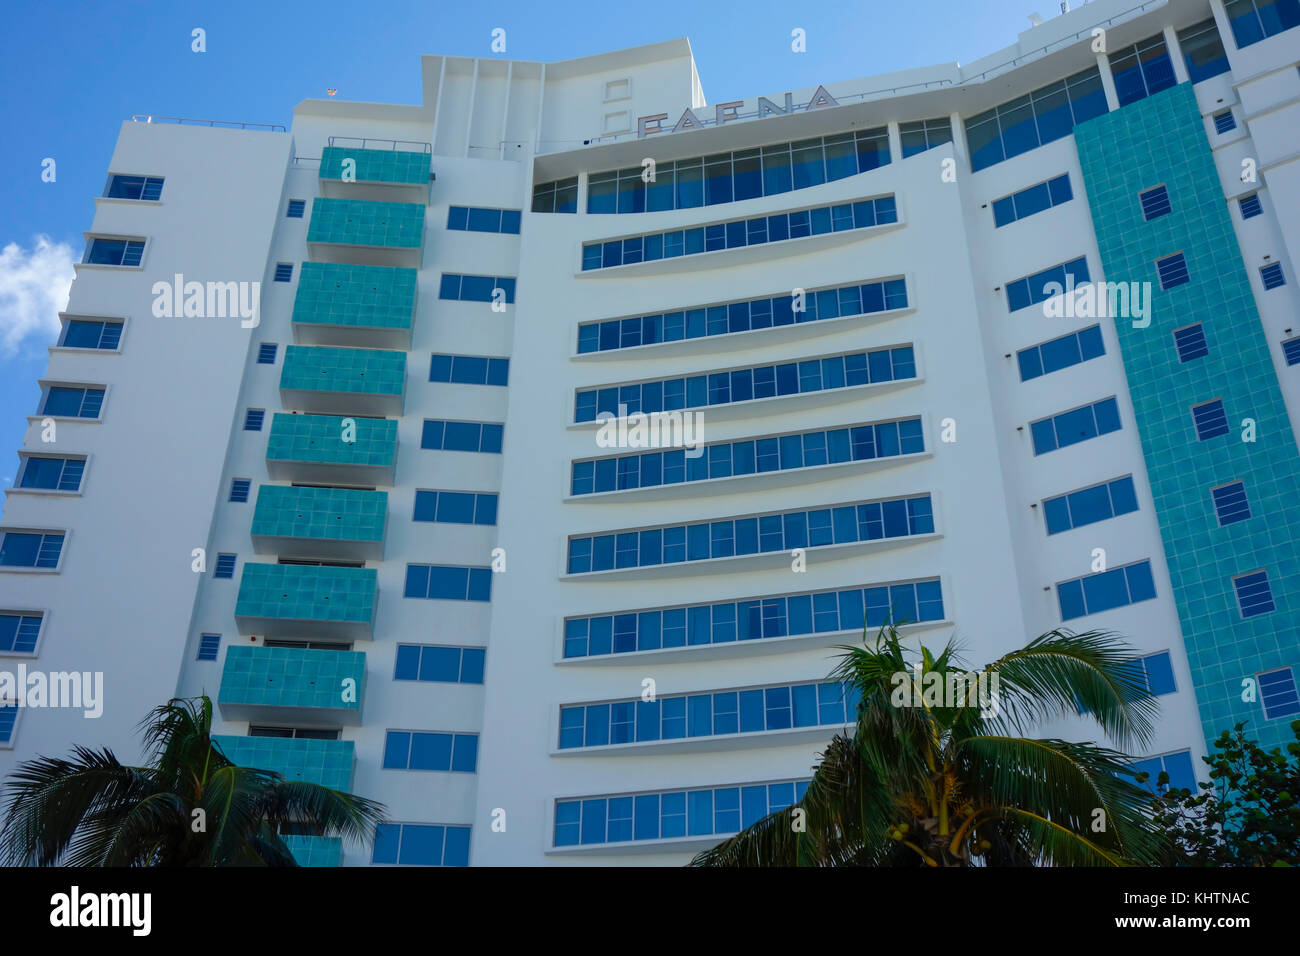 Faena Hotel Miami Beach, USA Stock Photo